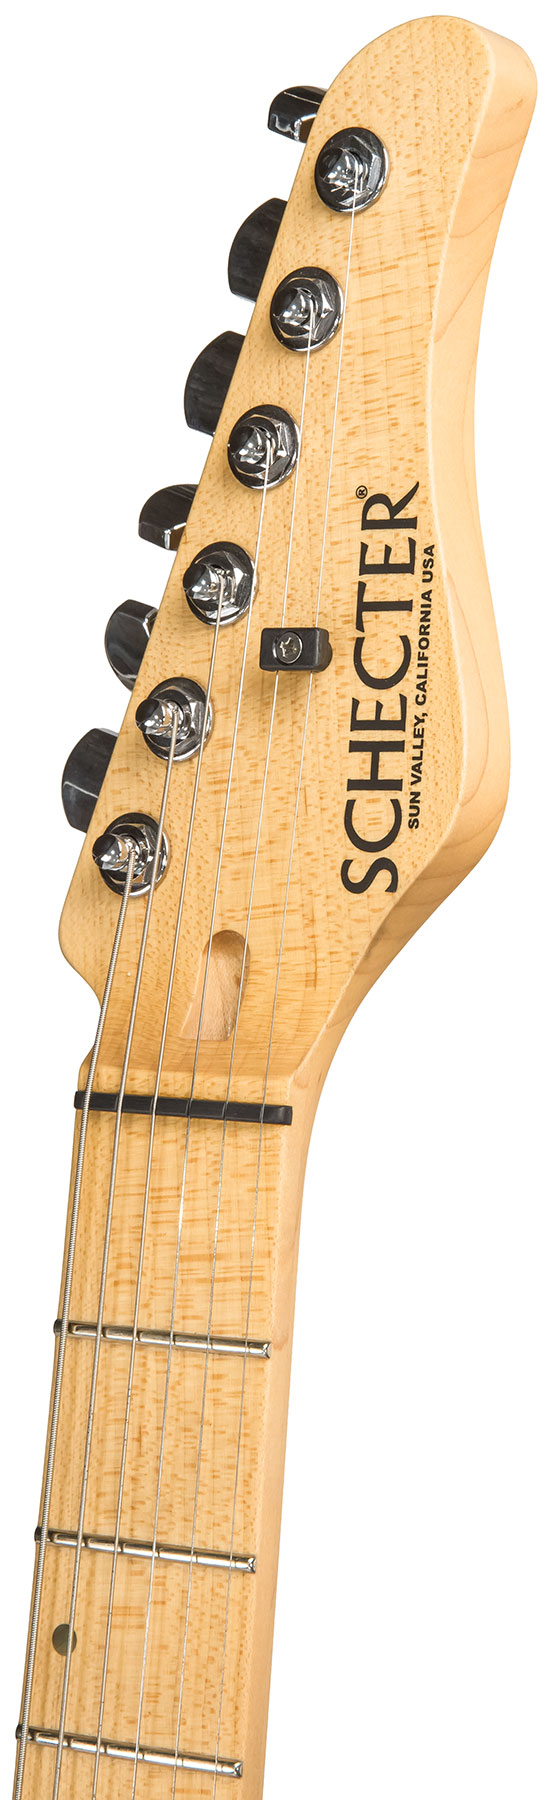 Schecter Custom Shop Sunset Usa Hss Trem Mn #1409001 - Trans Sky Blue - E-Gitarre in Str-Form - Variation 2